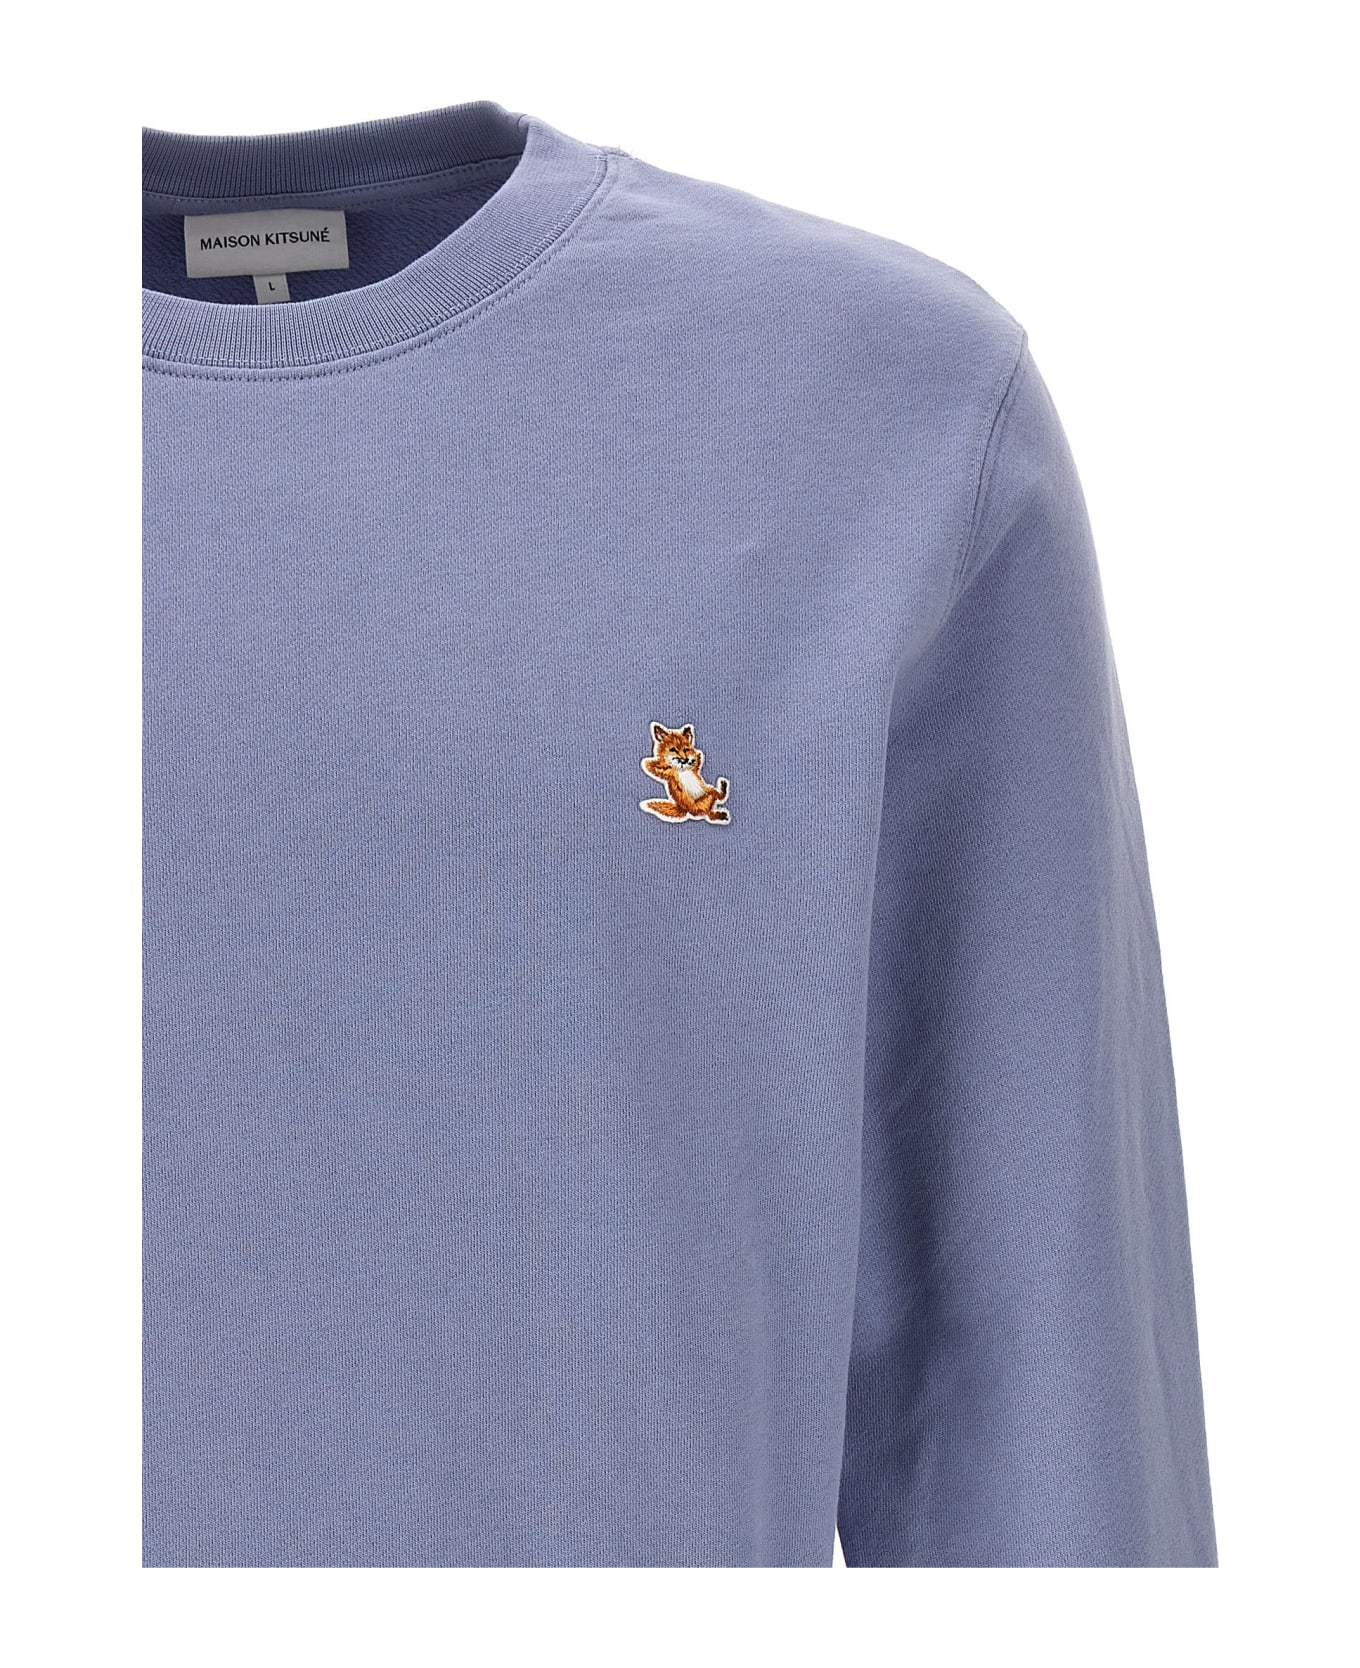 Maison Kitsuné 'chillax Fox' Sweatshirt - Light Blue